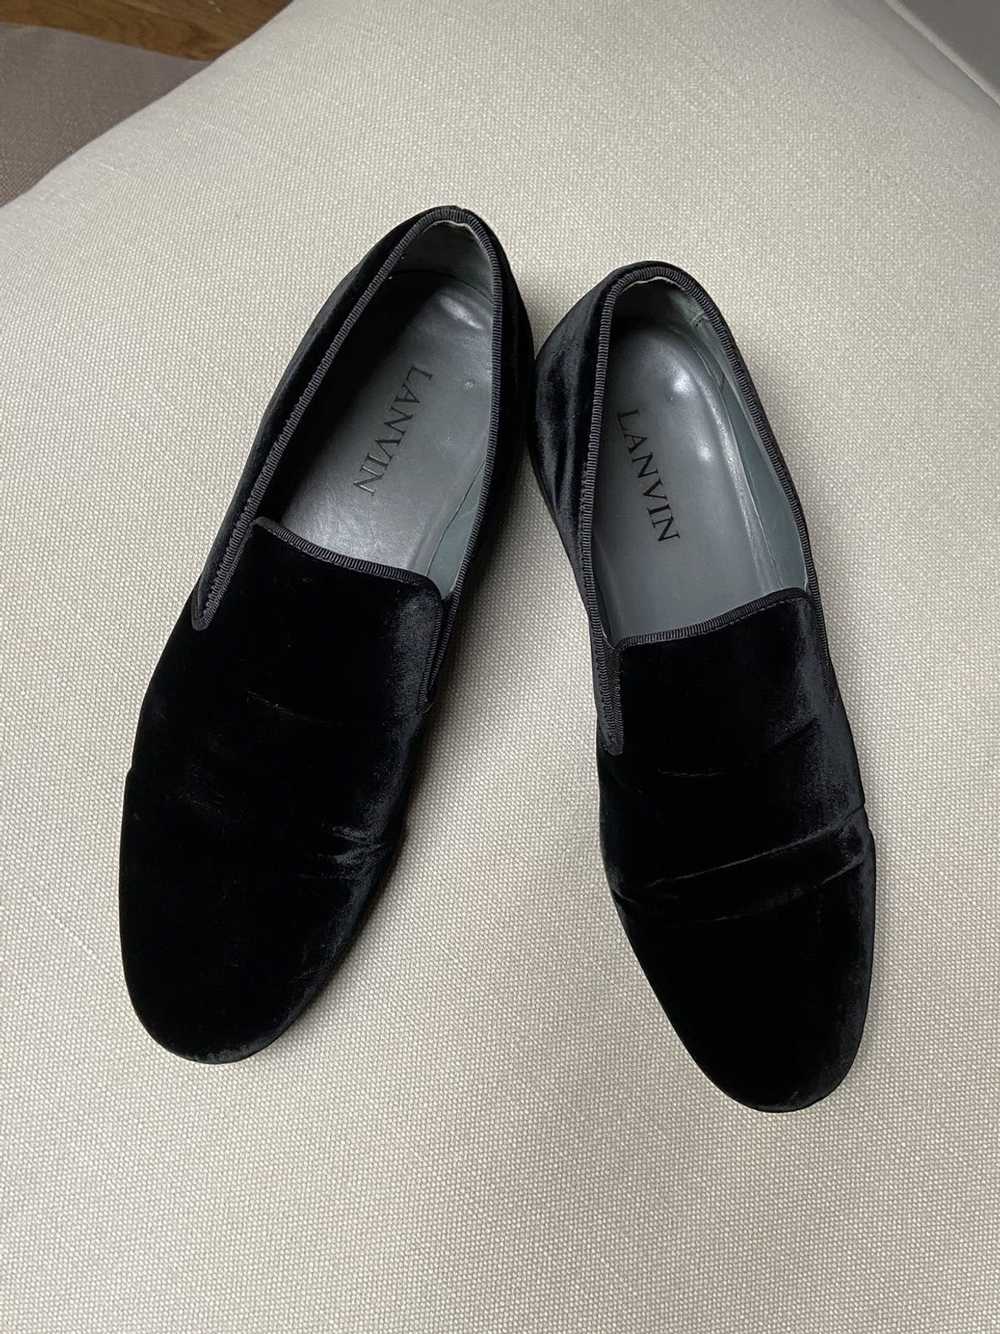 Lanvin Lanvin velvet black formal shoes - image 1